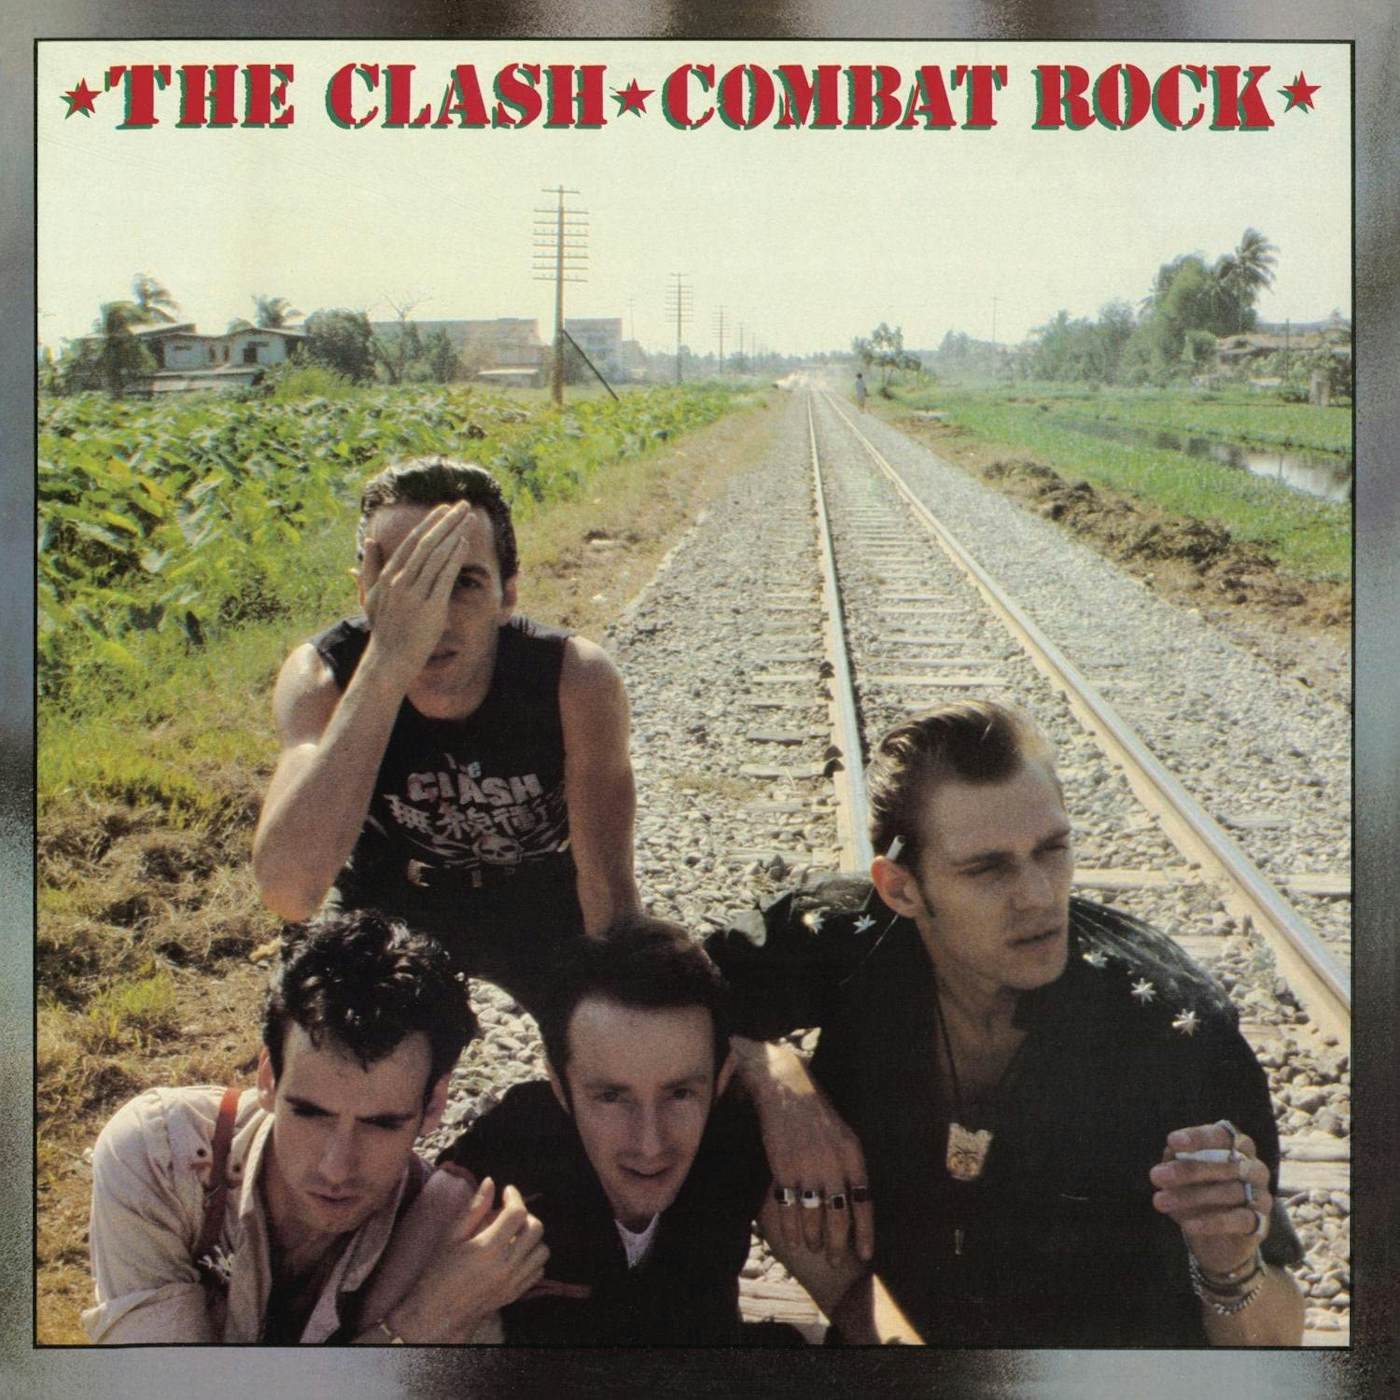 The Clash LP Vinyl Record - Combat Rock